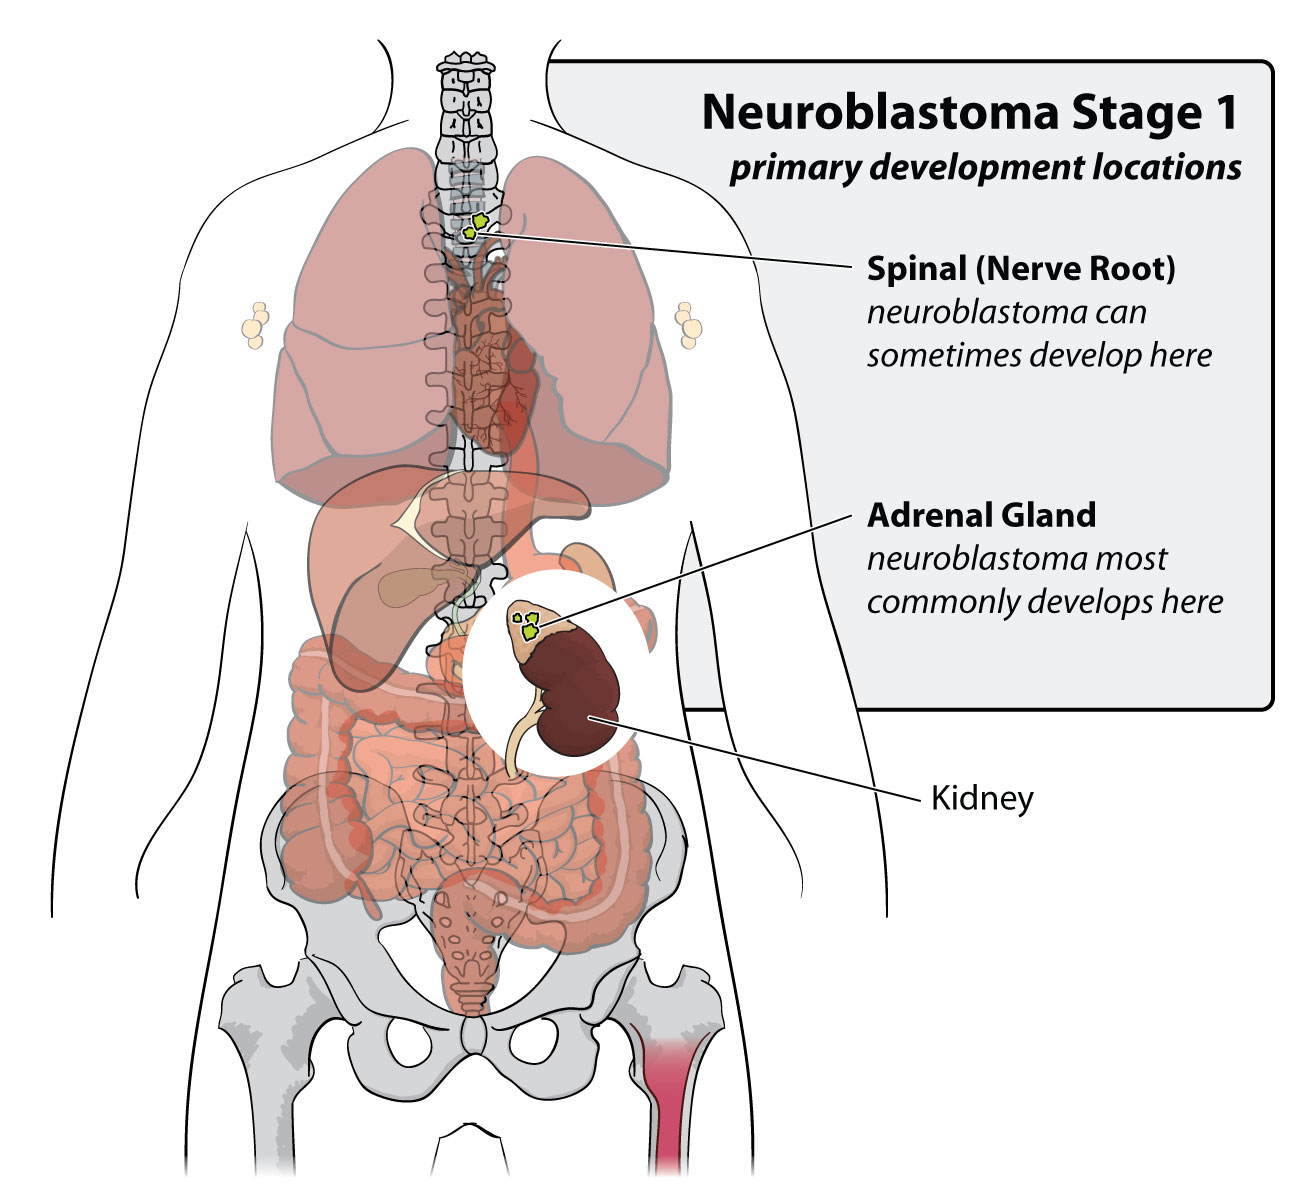 Neuroblastoma Stage 1 primary development locations